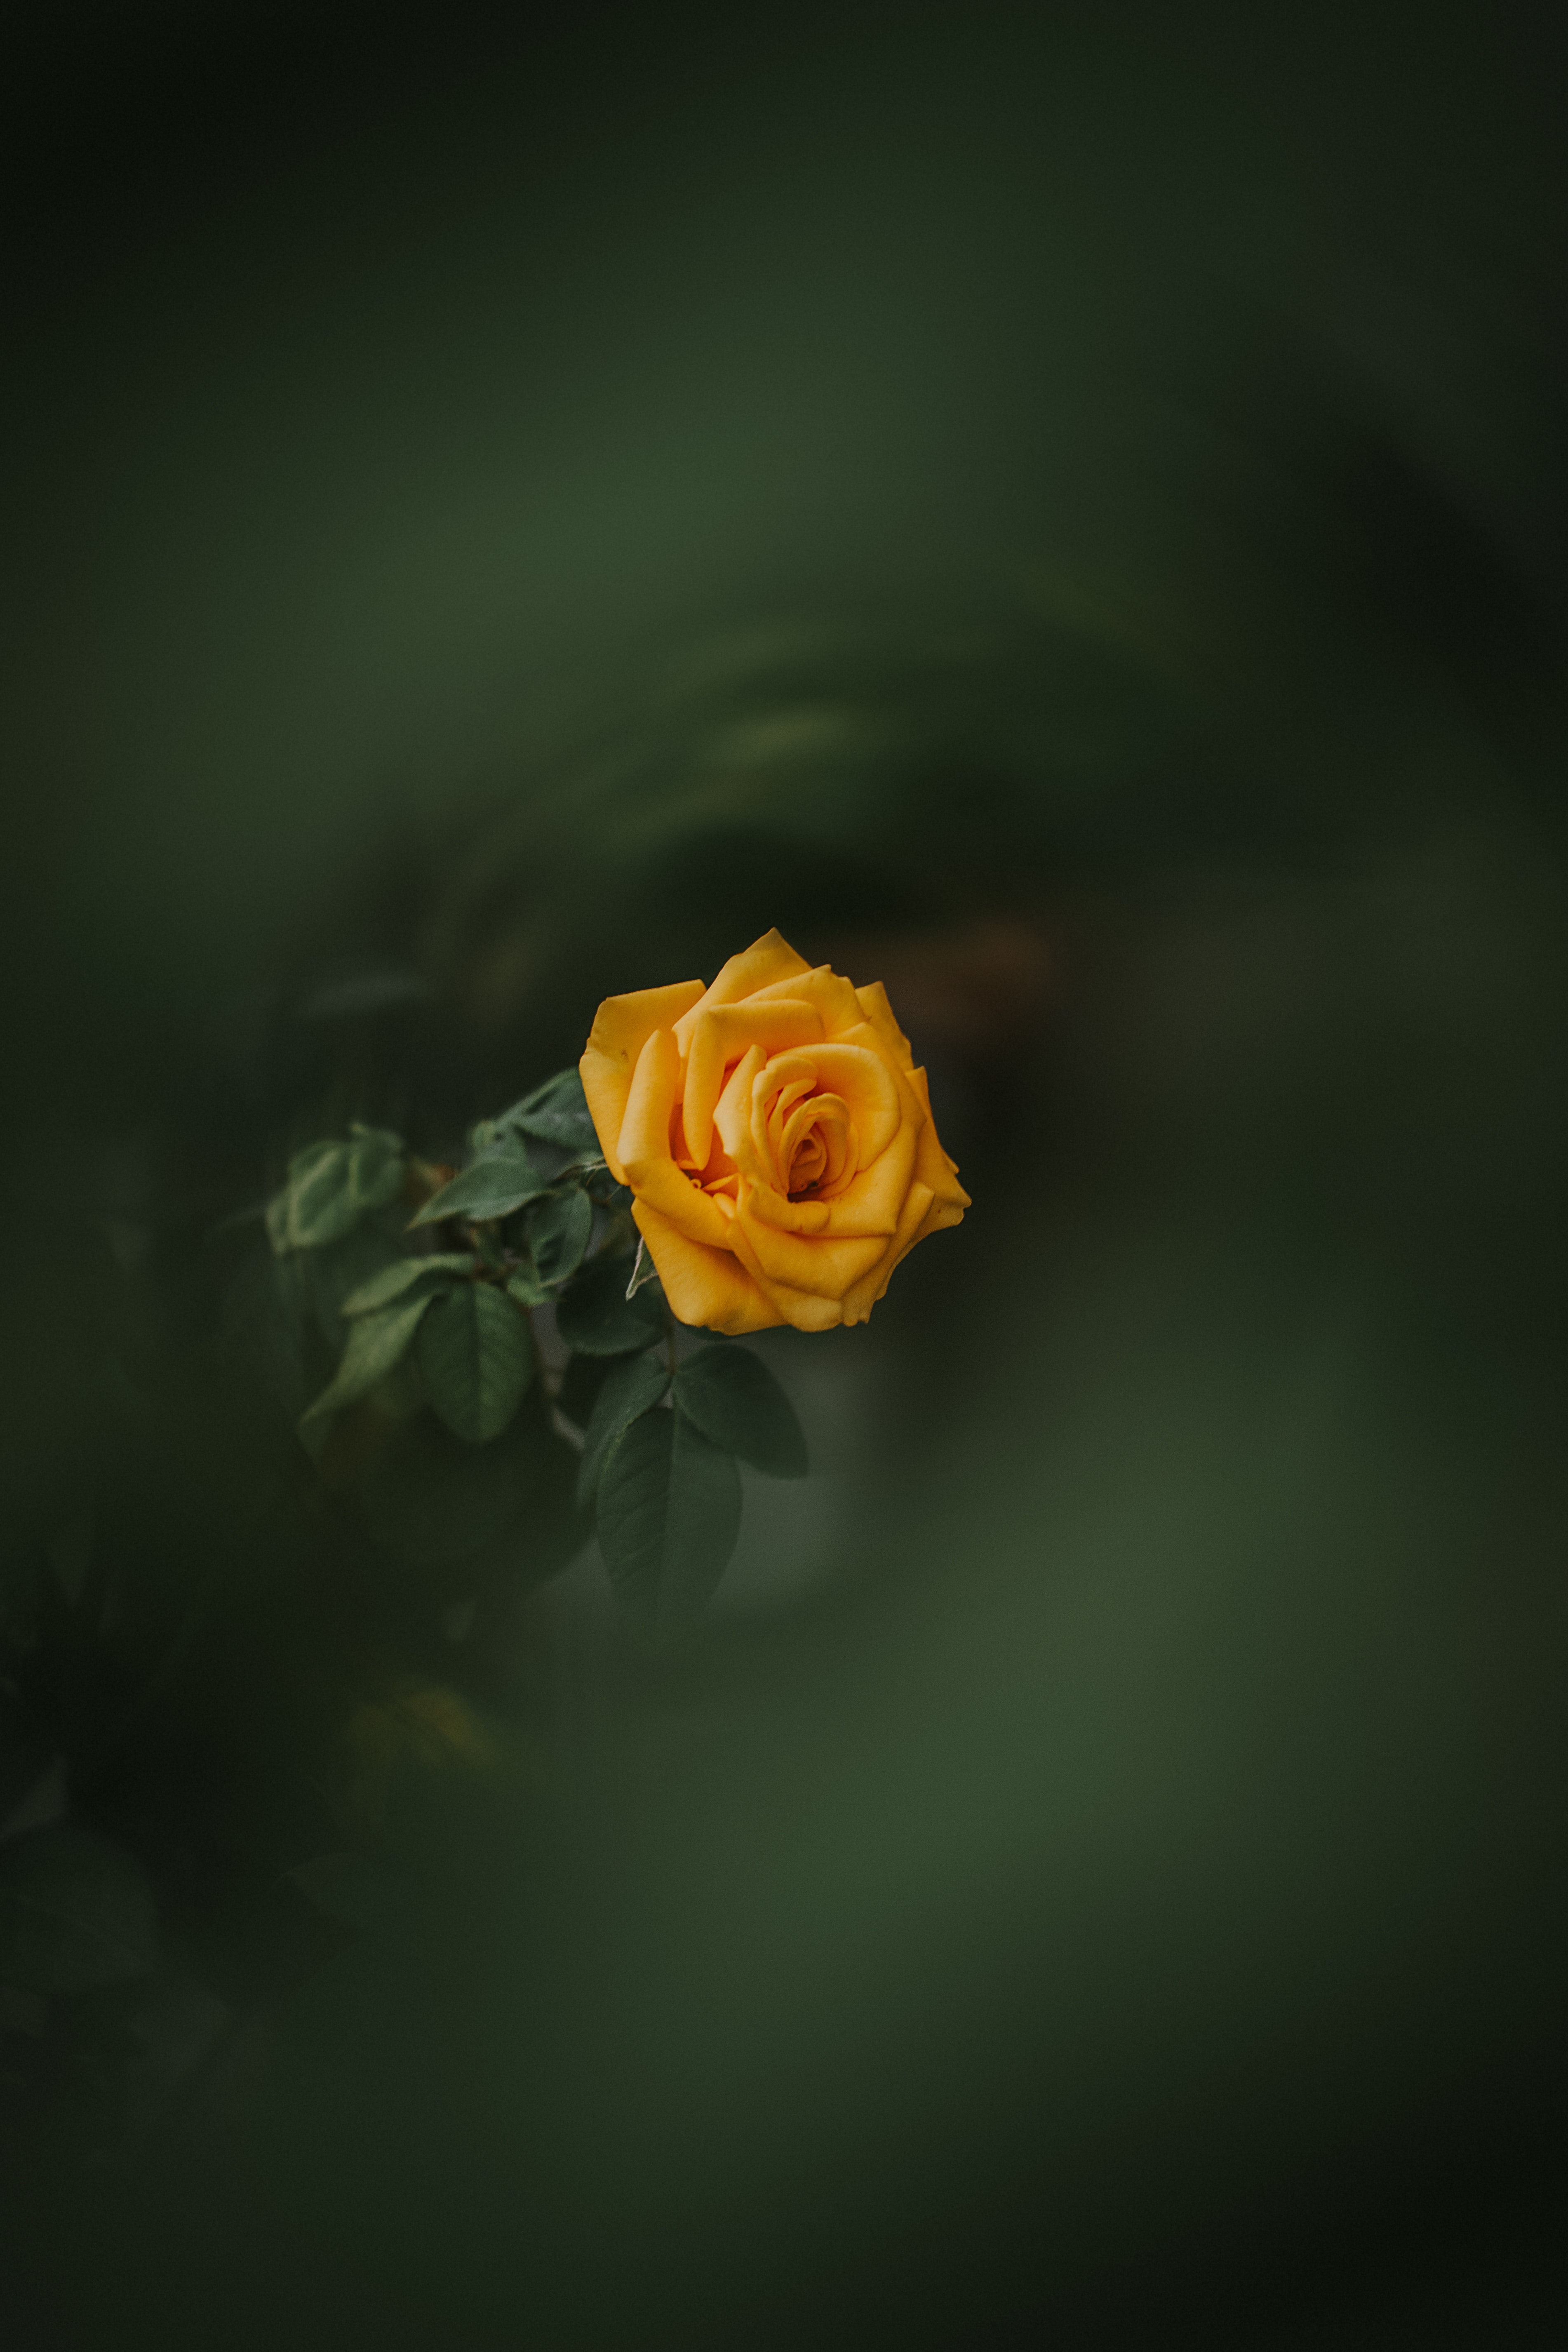 rose, rose flower, green, flowers, yellow, bud, blur, smooth, garden cellphone